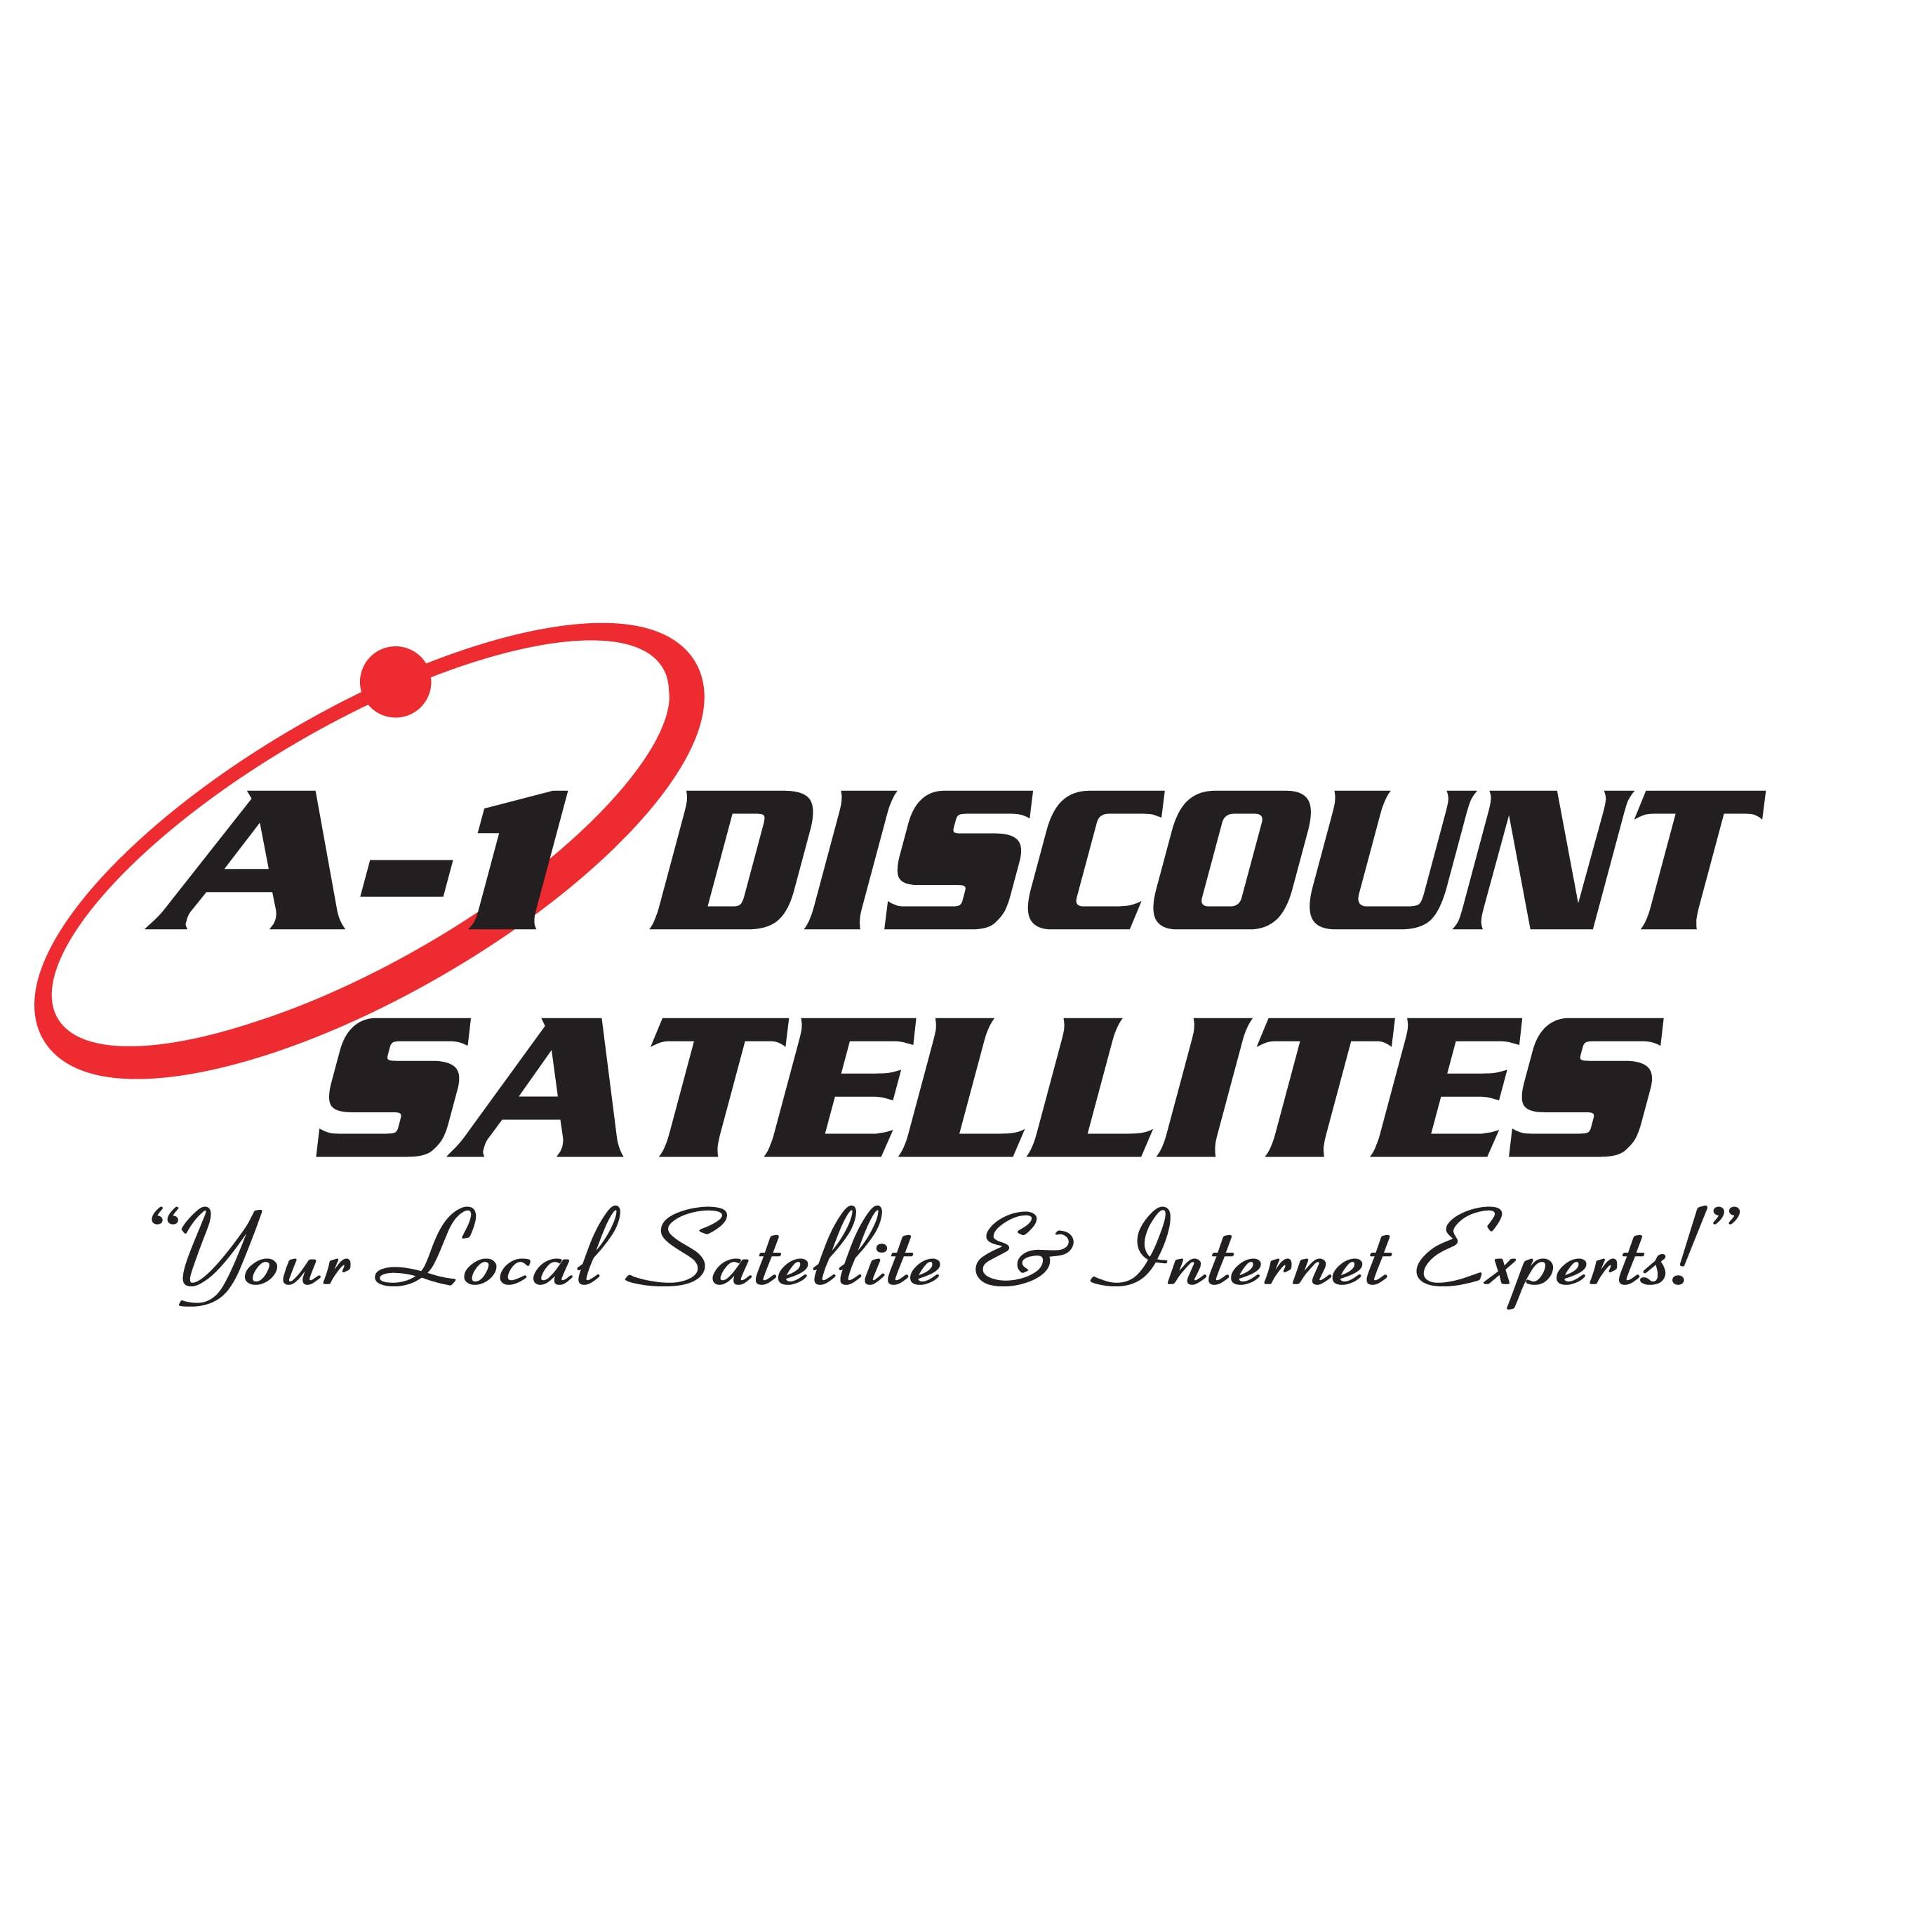 A-1 Discount Satellites Logo